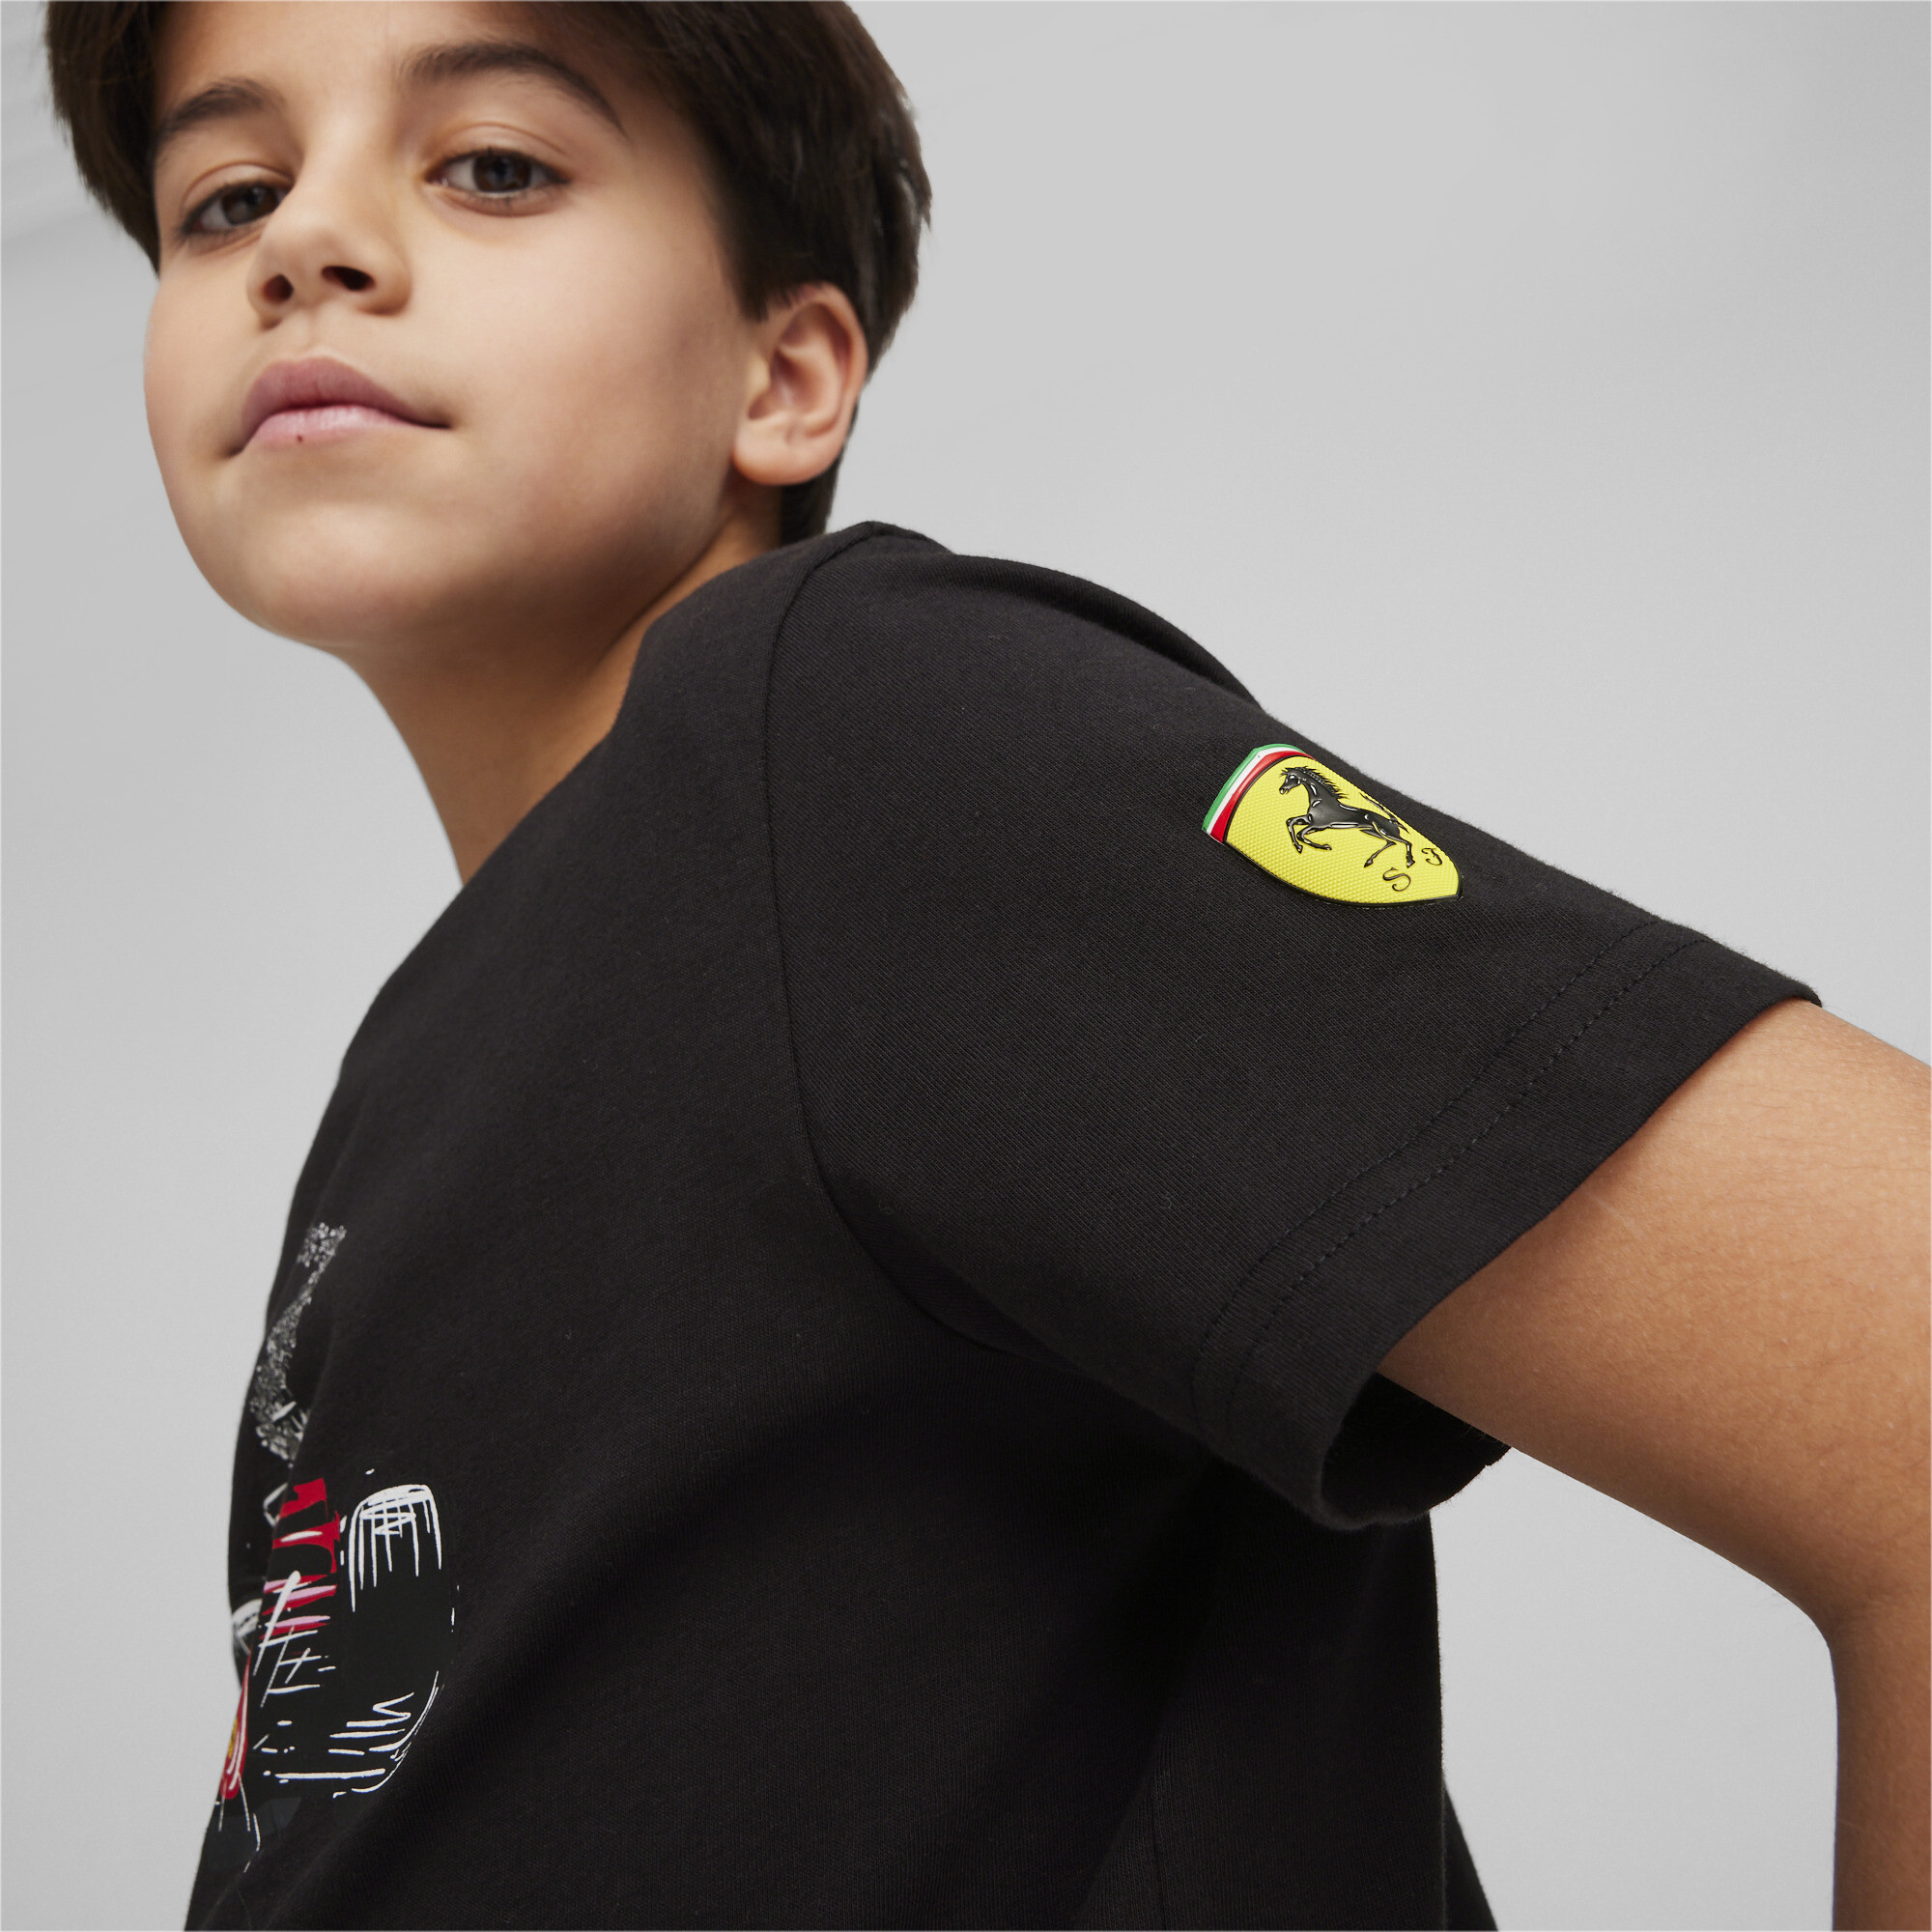 Puma Scuderia Ferrari Race Youth Motorsport Graphic T-Shirt, Black, Size 11-12Y, Clothing